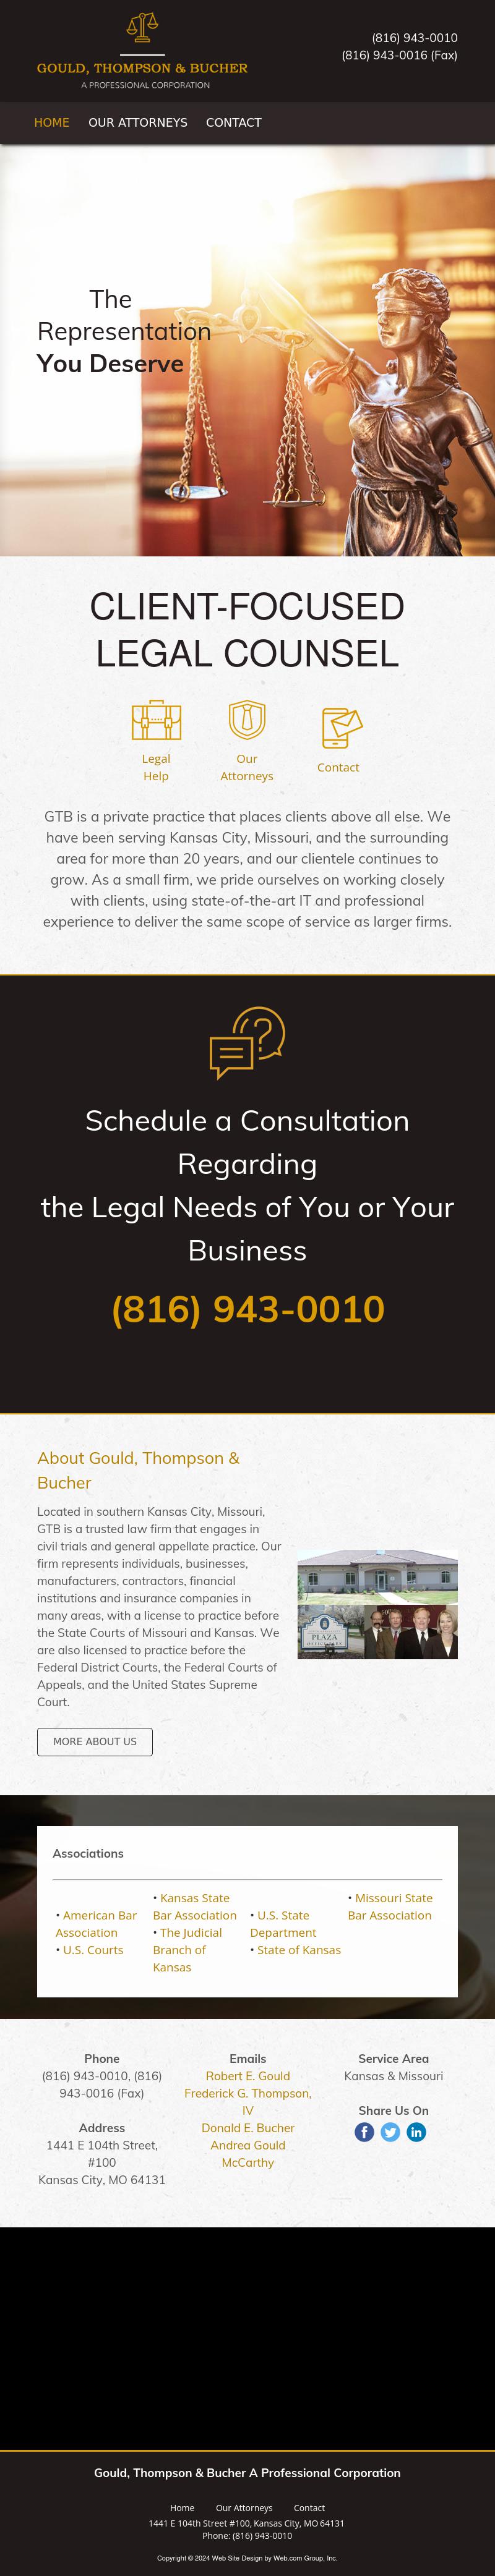 Gould, Thompson & Bucher, A Professional Corporation - Kansas City MO Lawyers